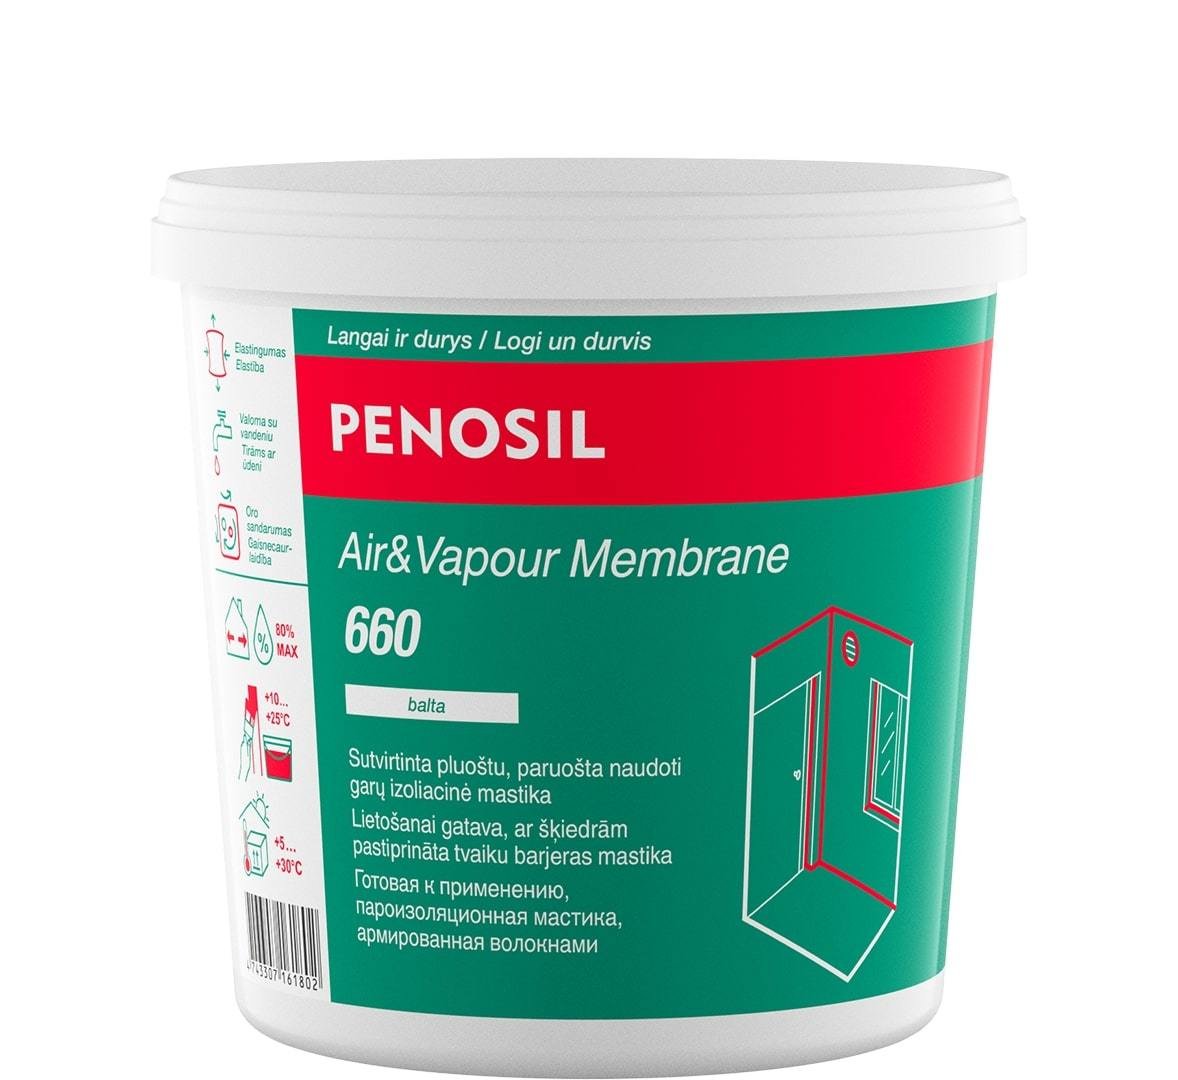 Garų izoliacinė mastika PENOSIL Air&Vapour Membrane 660, baltos sp., 1 kg